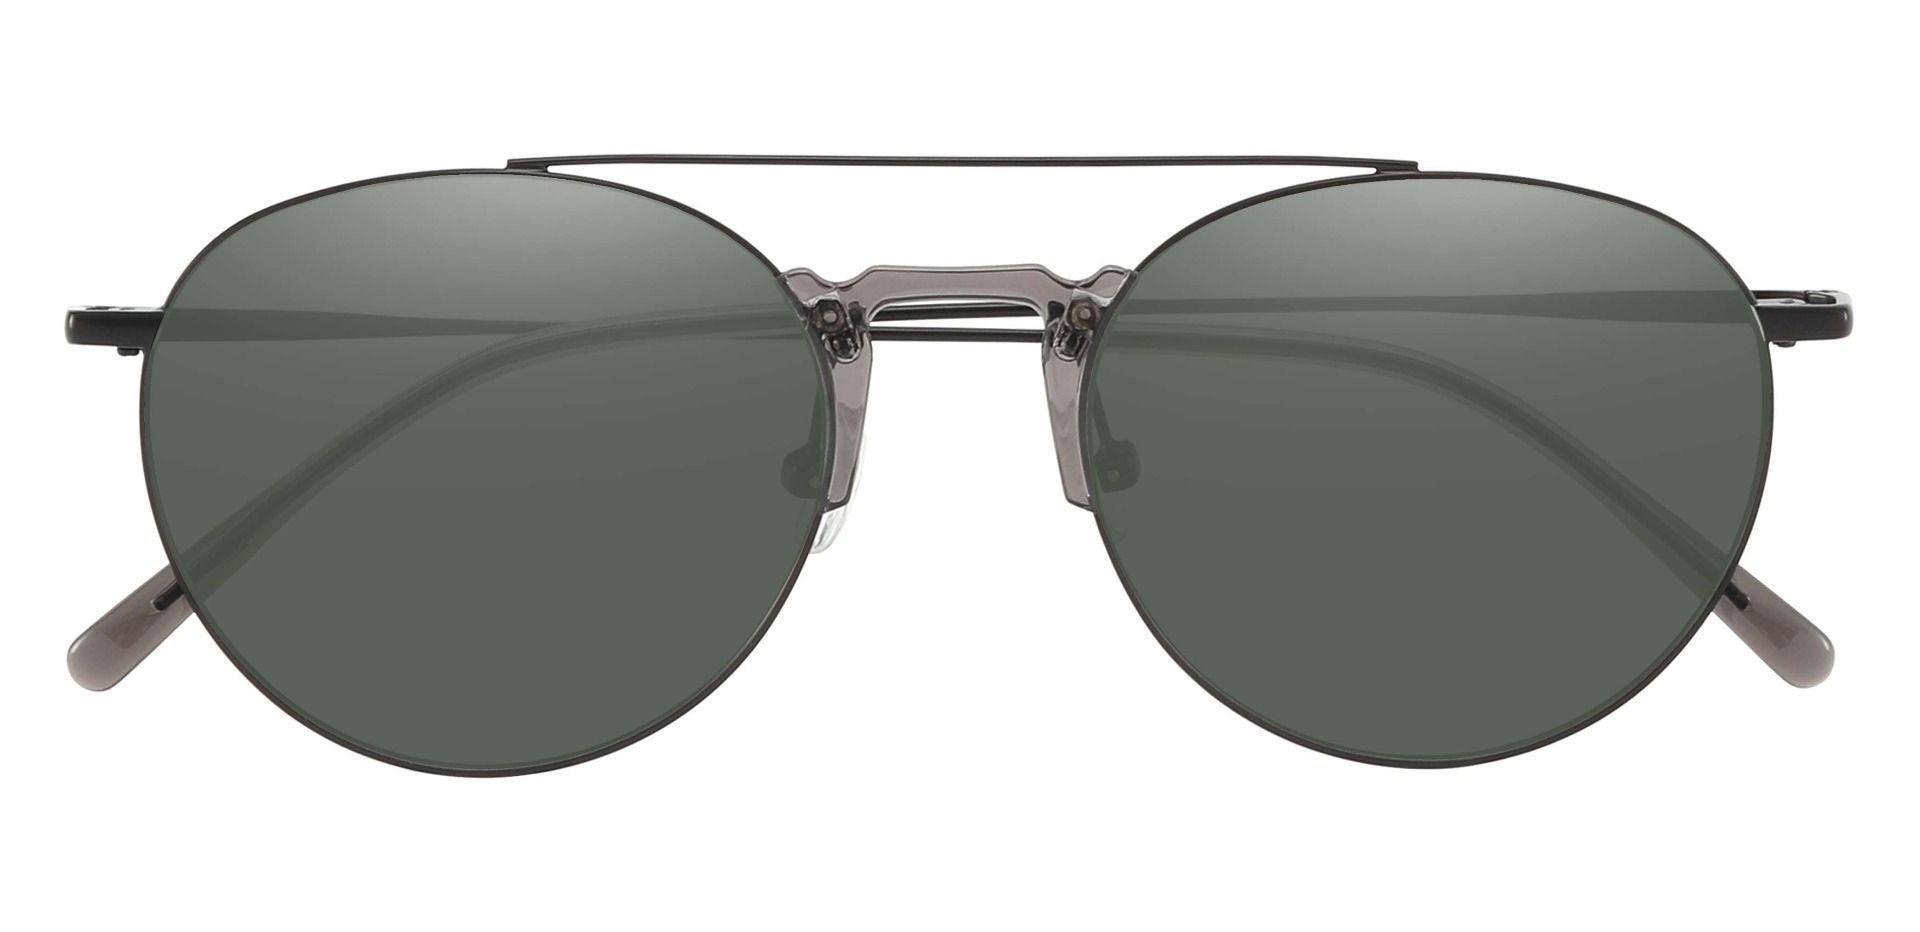 Ludden Aviator Lined Bifocal Sunglasses - Black Frame With Green Lenses